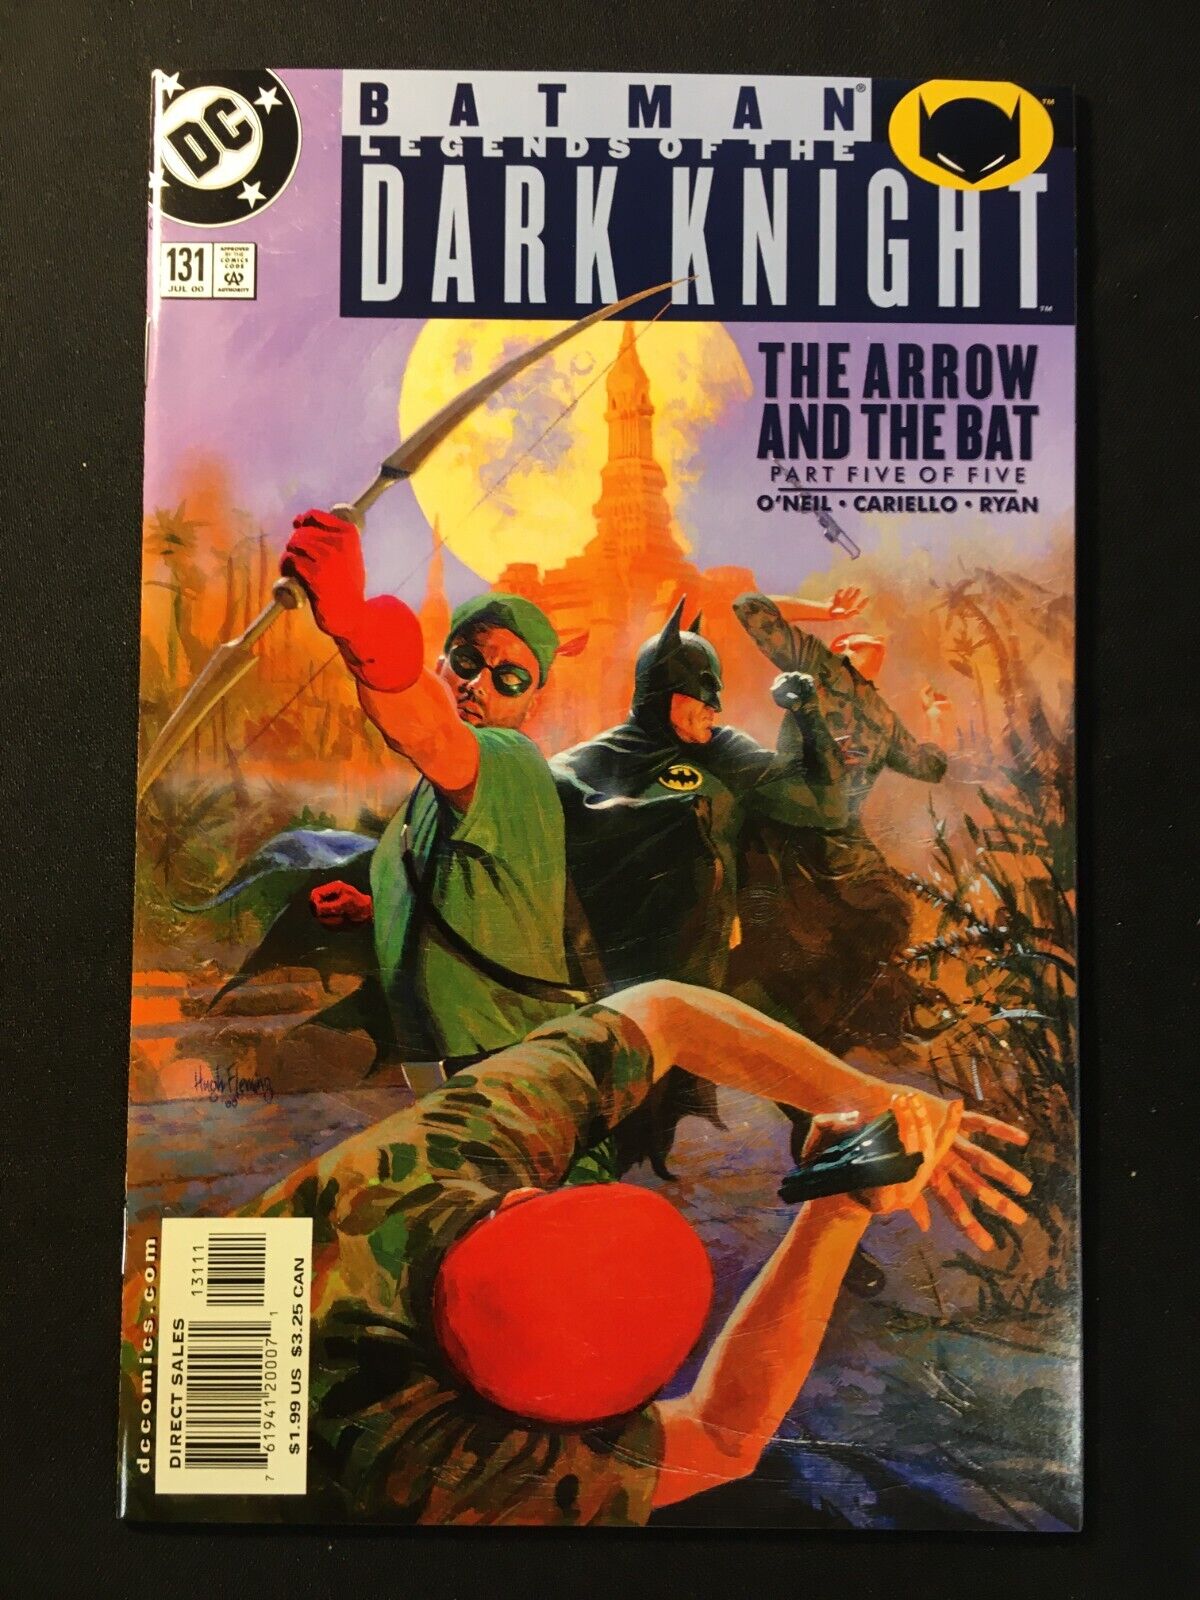 BATMAN Legends of the Dark Knight 131 The Arrow and the Bat Fleming Green V 1